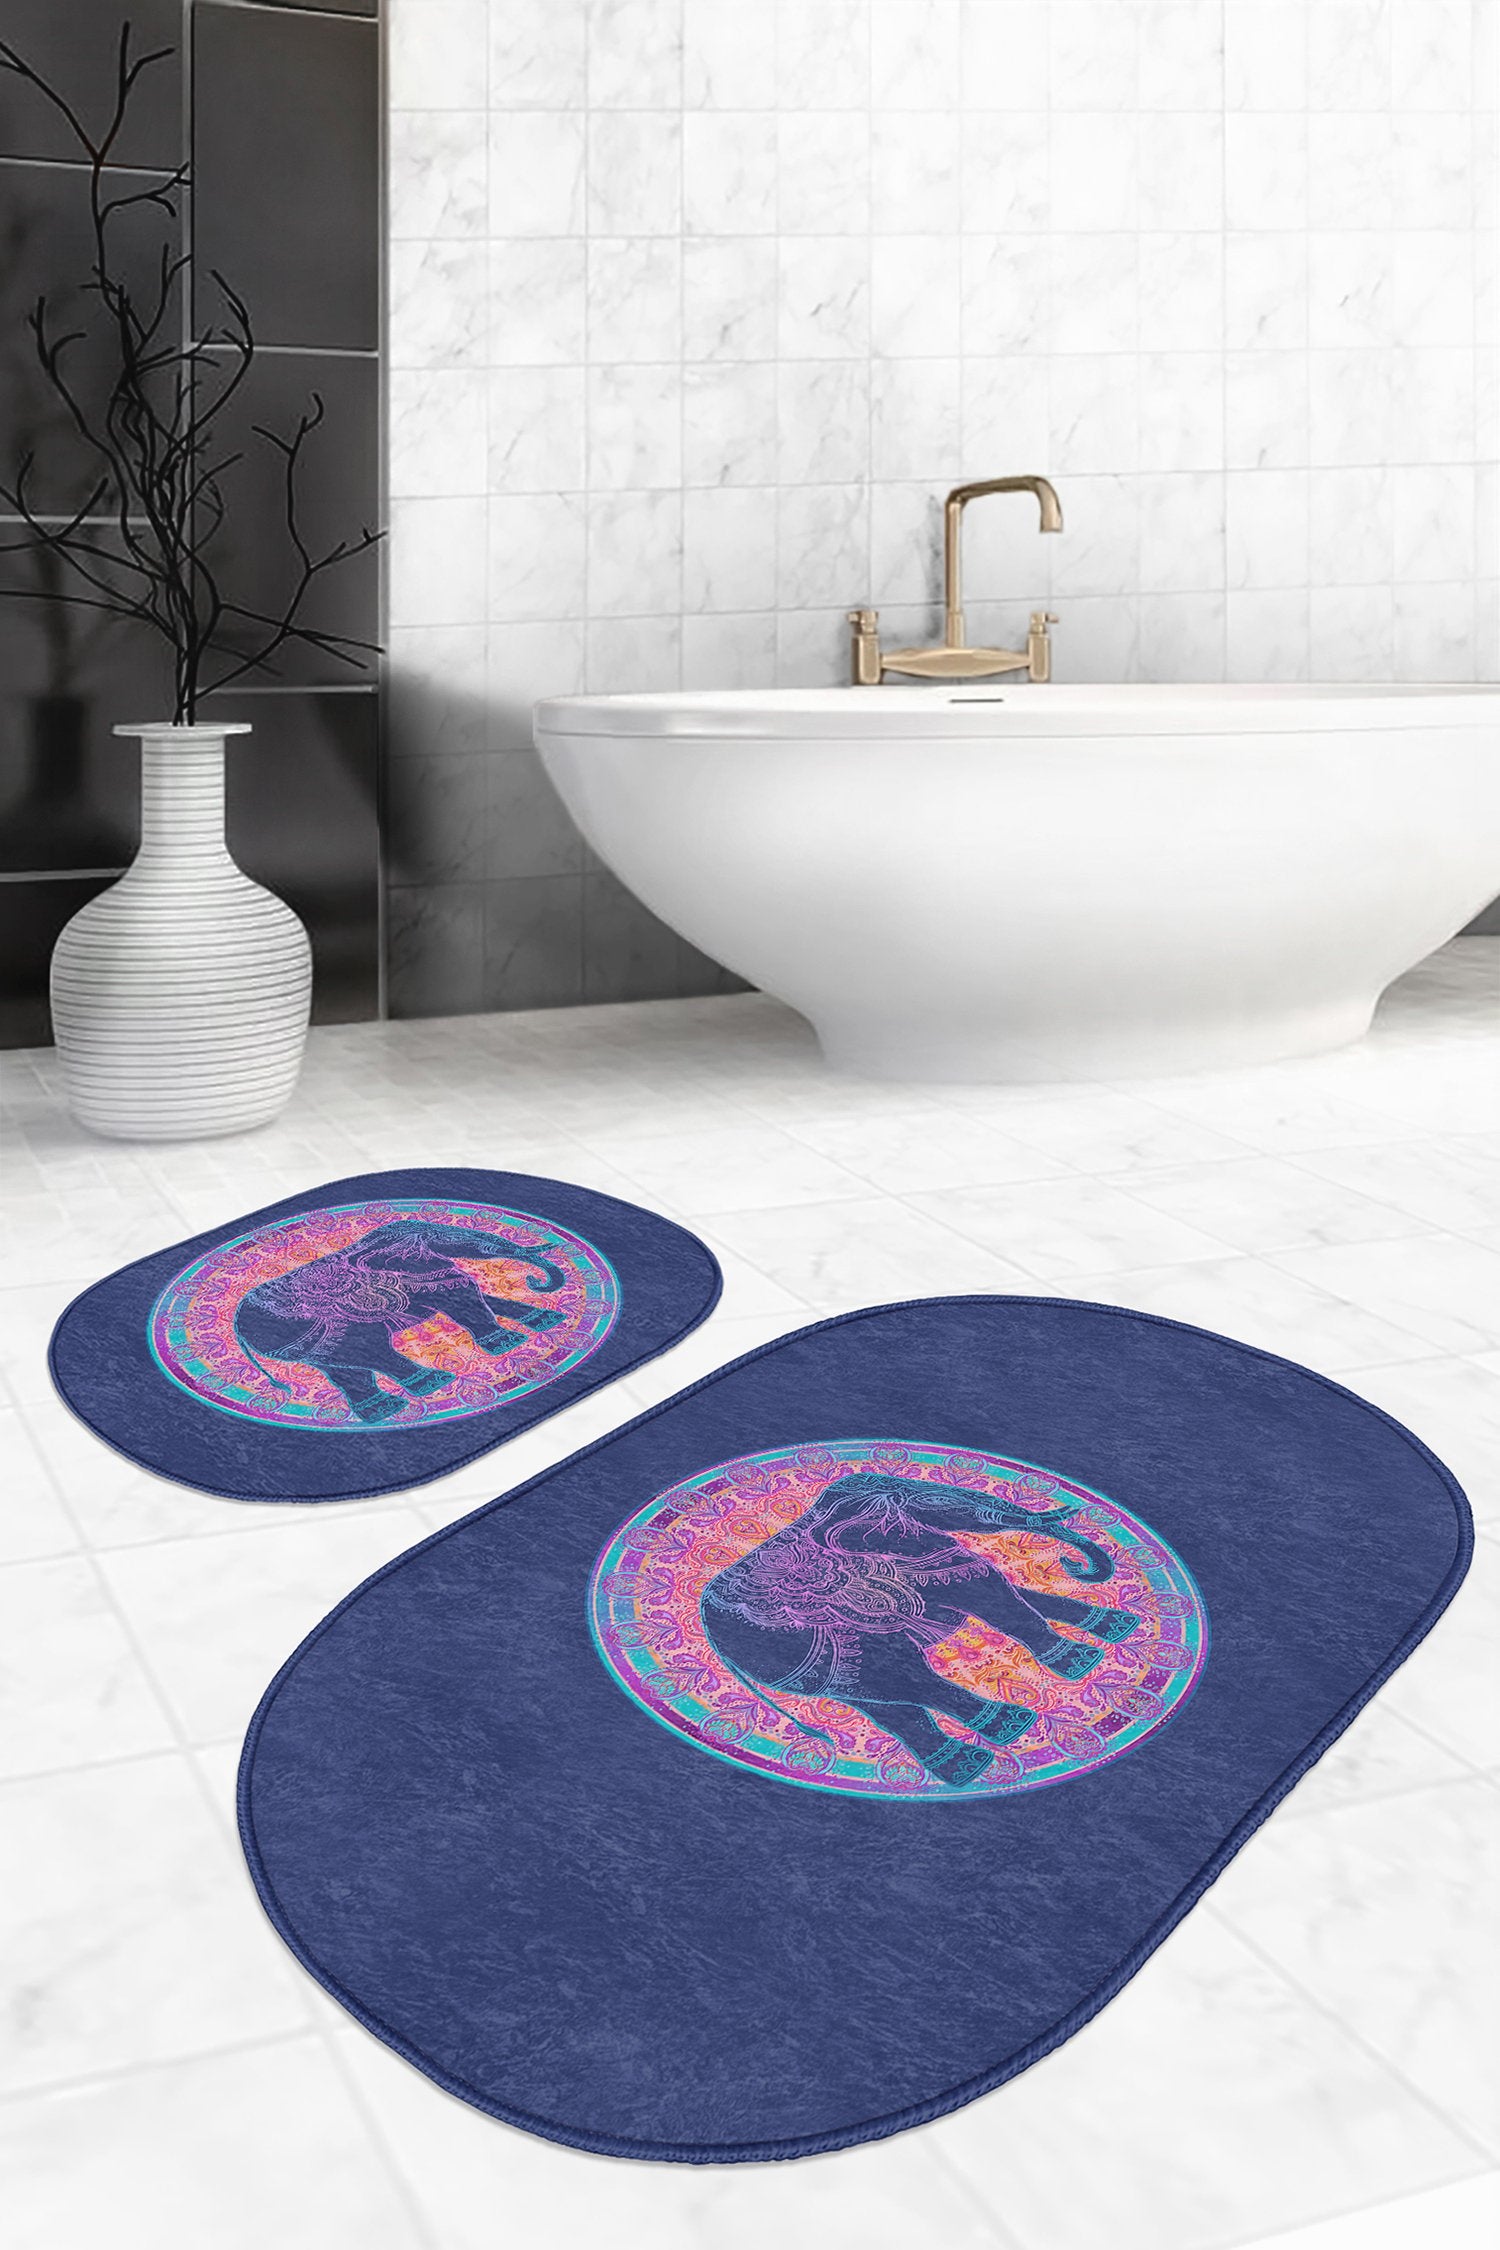 High-Quality Mystic Elephant Pattern Bath Mat Set for Stylish Decor